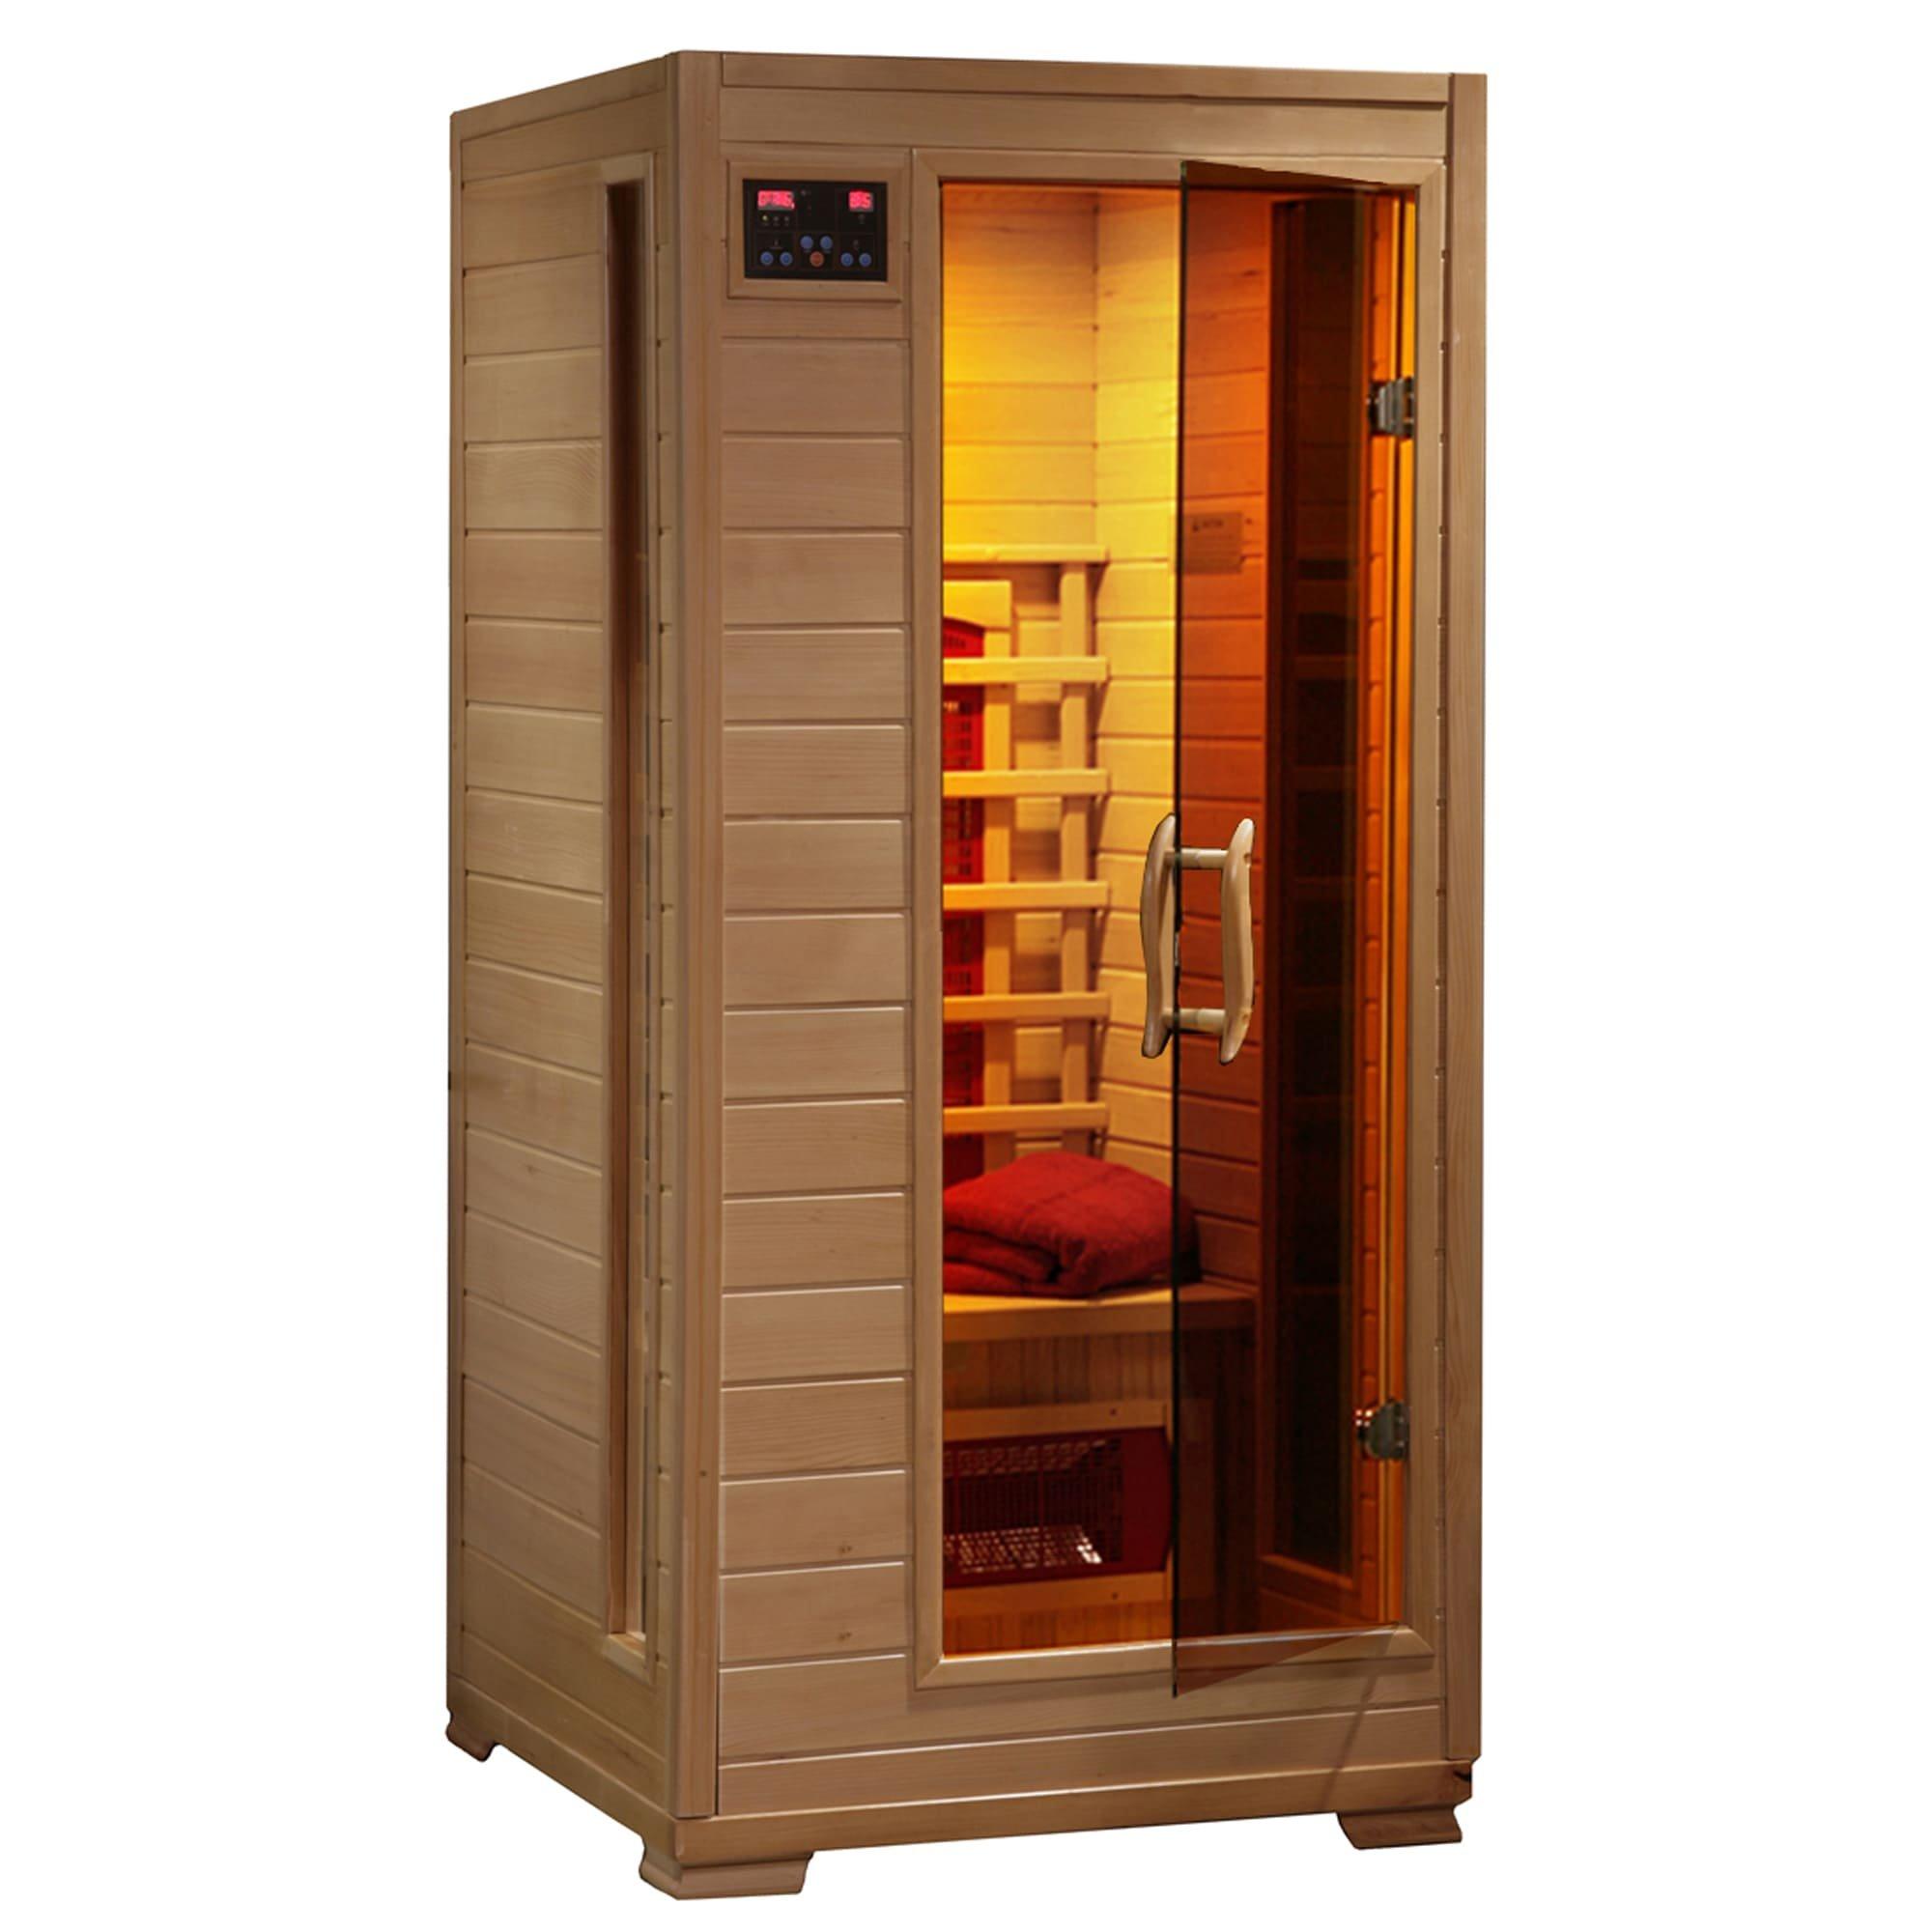 Heatwave Buena Vista 1 2 Person Hemlock Infrared Sauna w 3 Ceramic Heaters